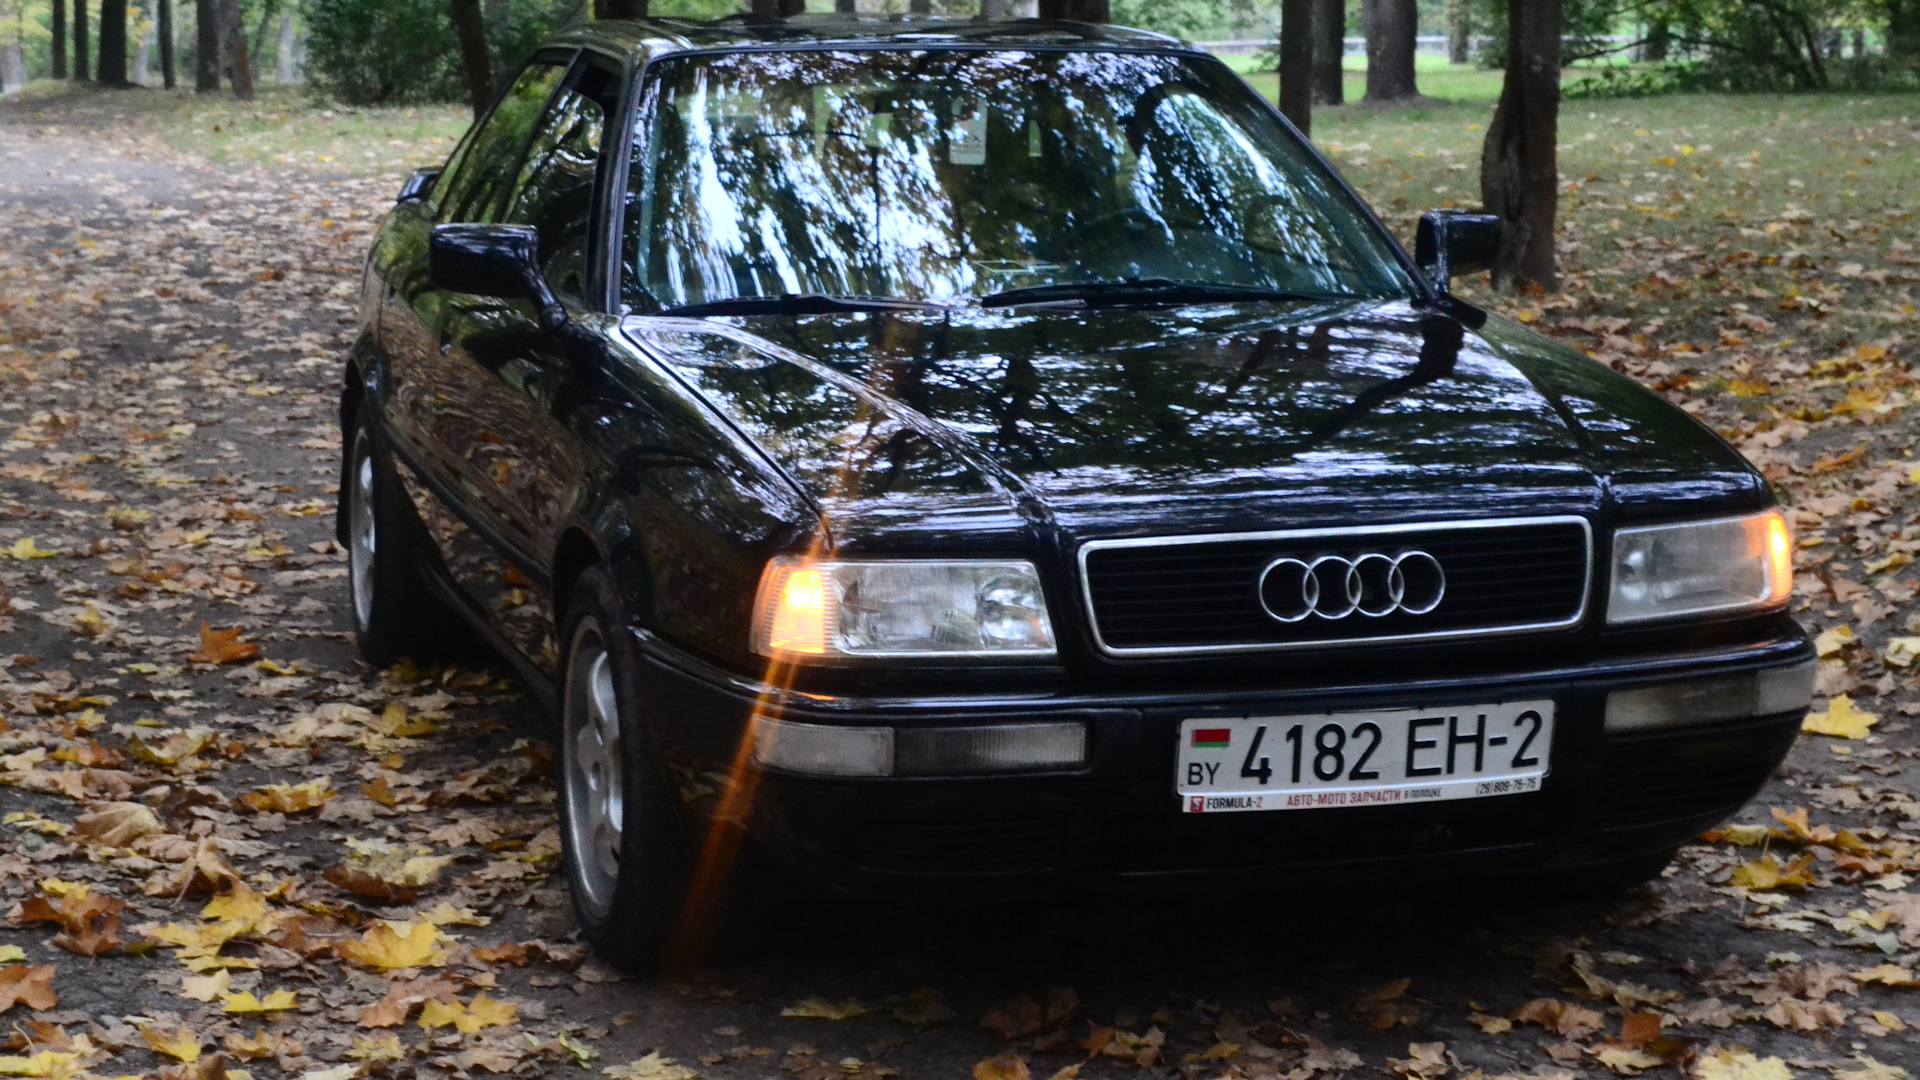 Купить ауди б4 в белоруссии. Audi 80 b4. Audi 80 b4 1996. Ауди 80 б4 черная. Ауди 80 b4 черная.